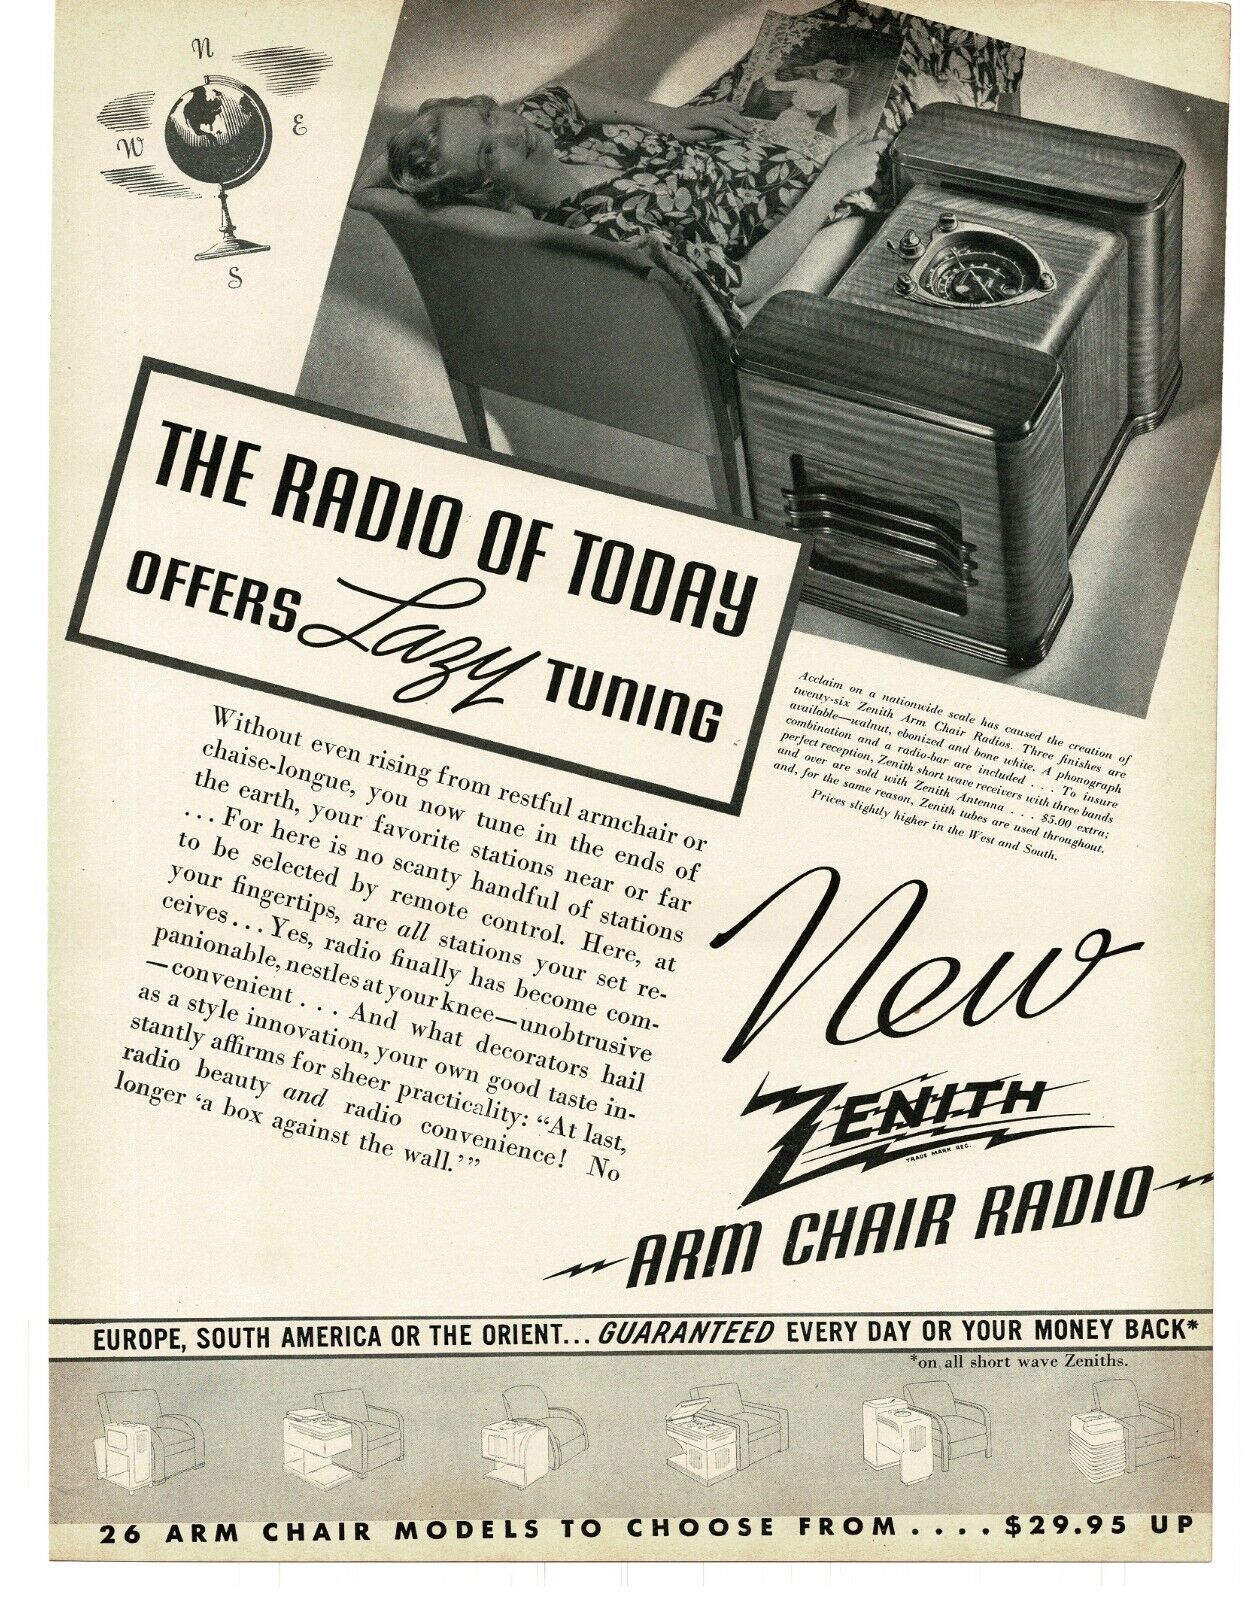 1937 Zenith Arm Chair Radio Model 15-U-246 Vintage Print Ad